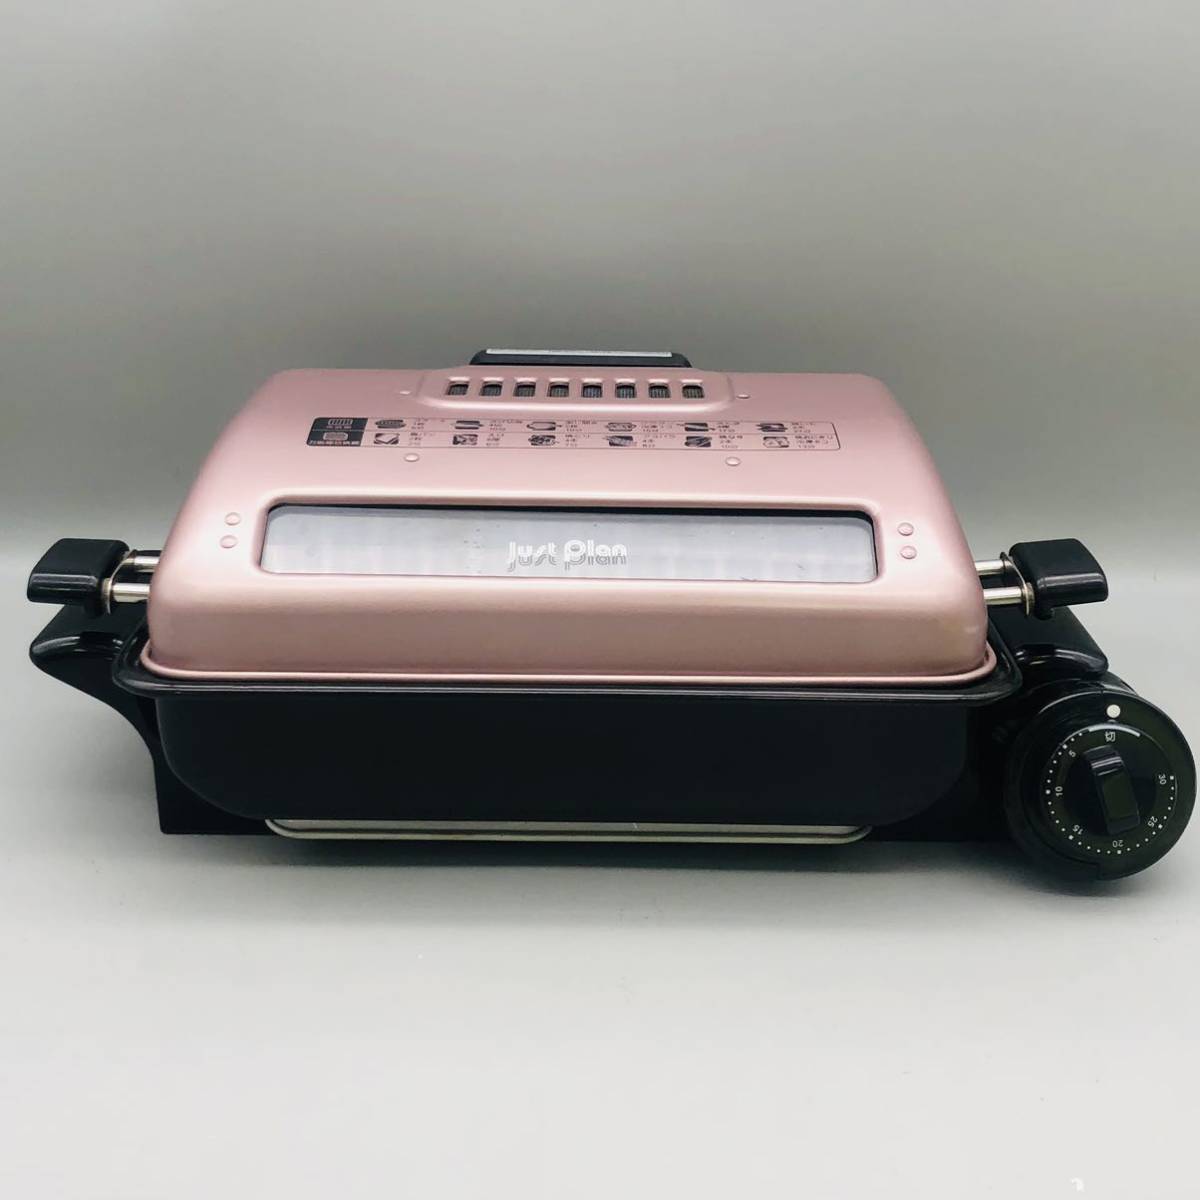 IZUMI 泉精器製作所 万能 ロースター 魚焼き器 卓上グリル IR-995 ピンク オーブン フィッシュロースター 調理器具 箱付き 動作確認済み_画像2